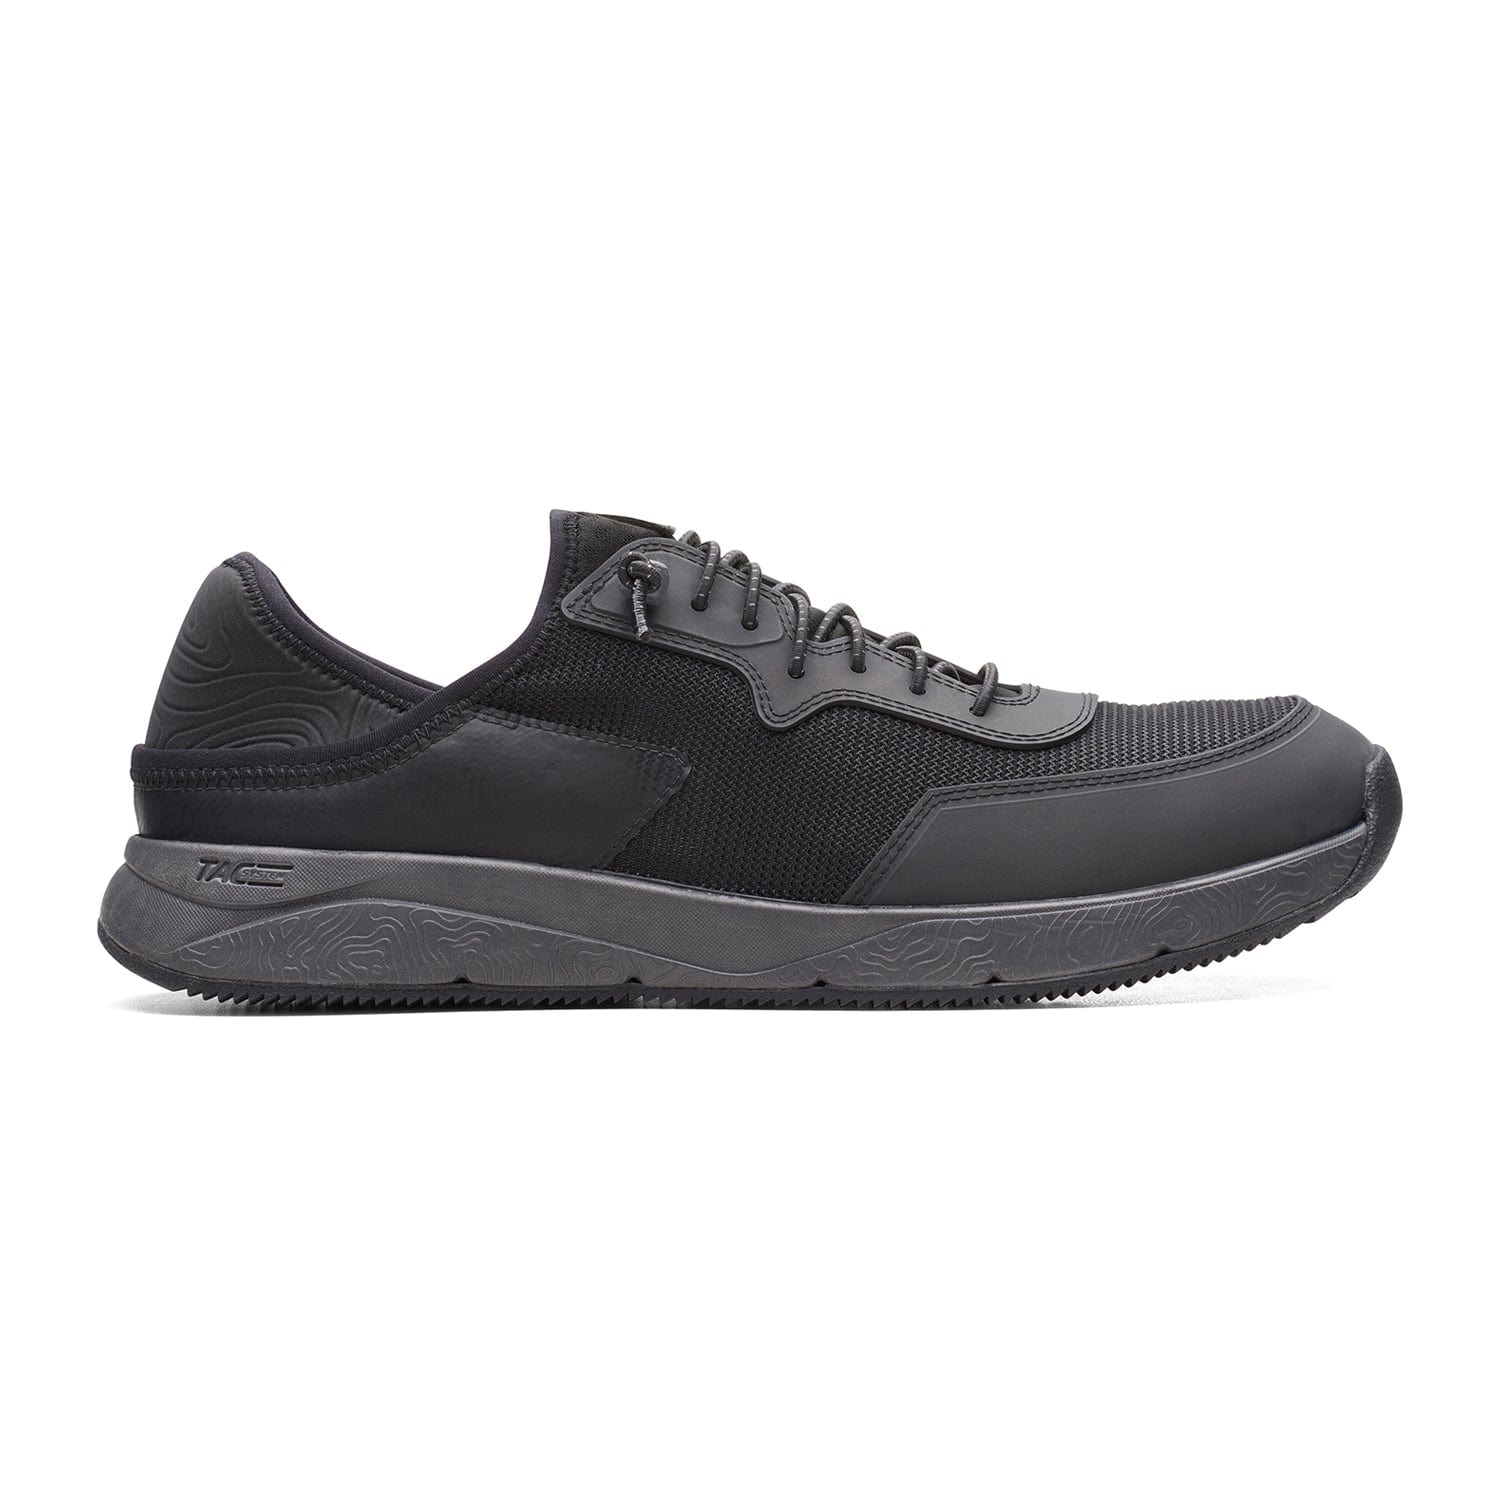 Clarks Davis Low - Shoes - Black Combi - 261653337 - G Width (Standard